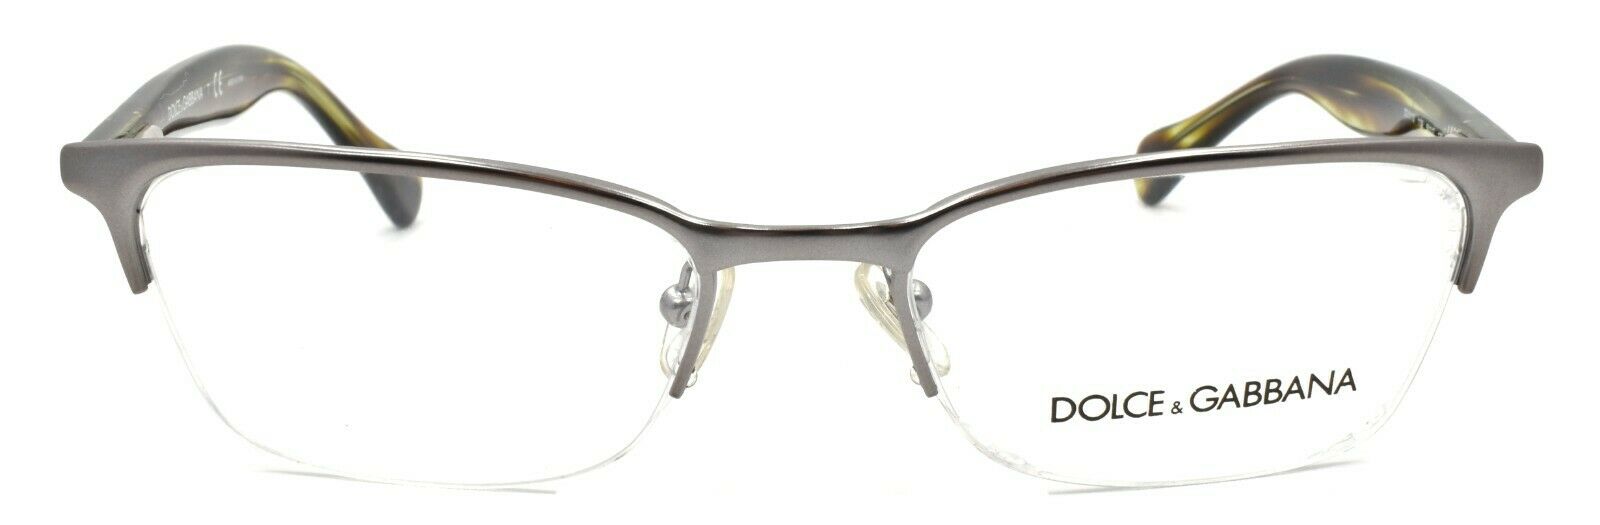 2-Dolce & Gabbana DD 5113 1139 Women's Eyeglasses Half-rim 50-17-135 Gunmetal-679420525679-IKSpecs